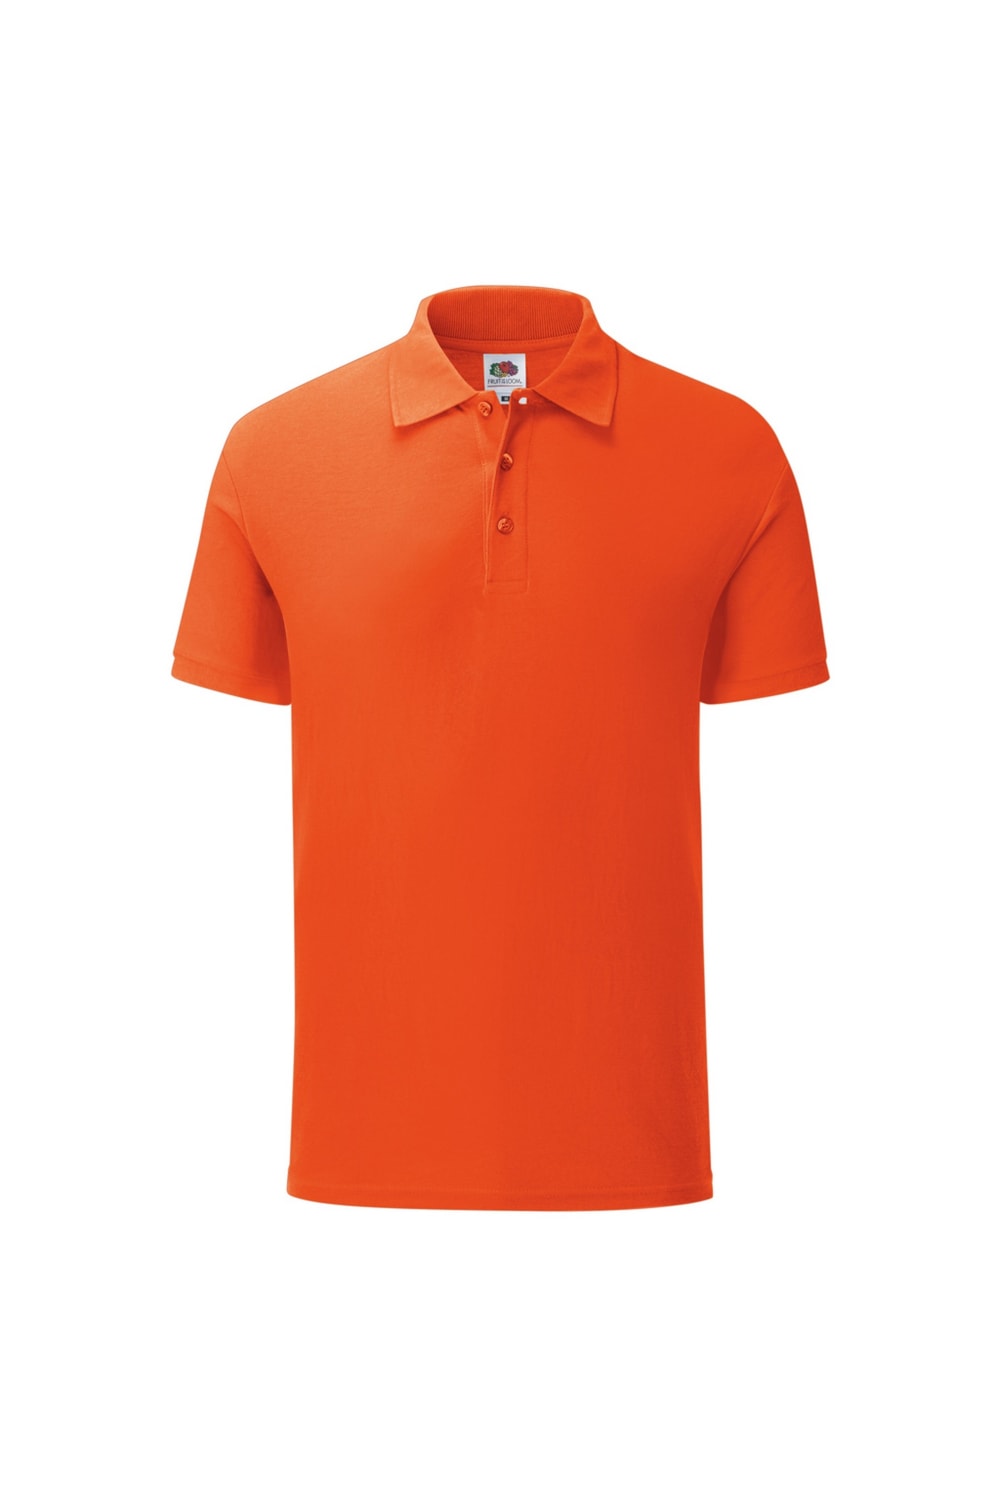 Mens Iconic Pique Polo Shirt (Flame Orange)